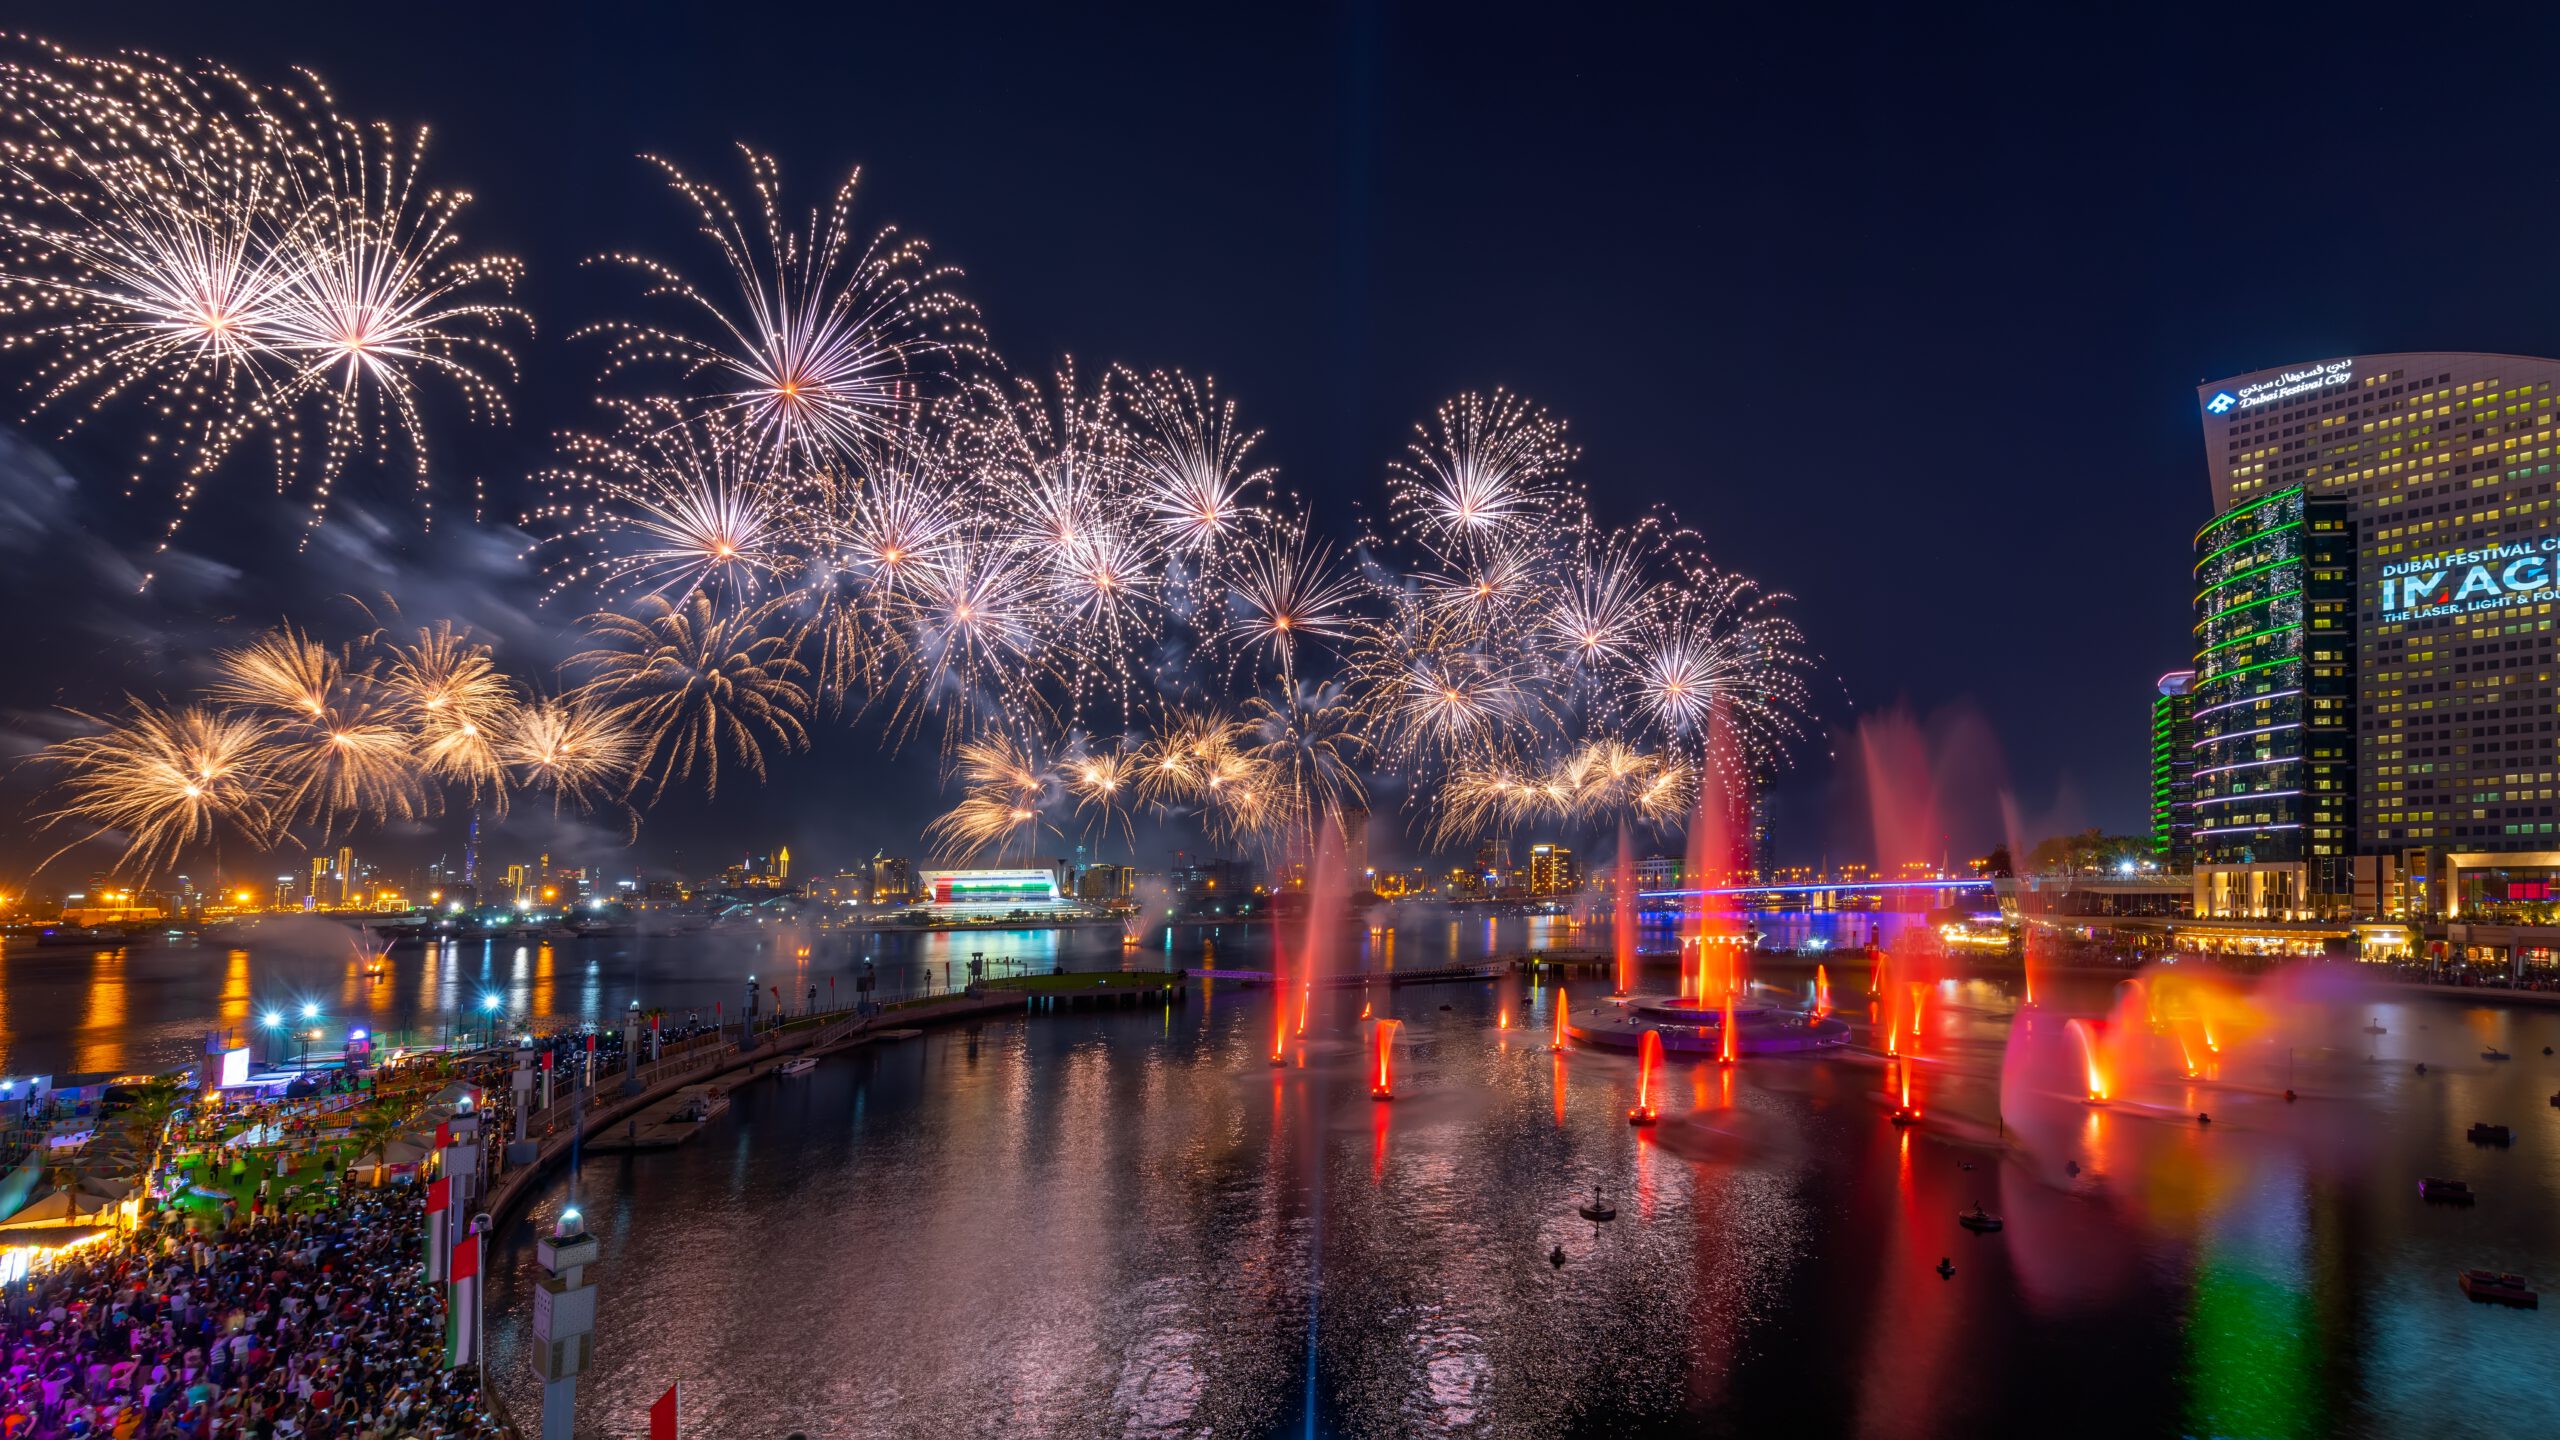 New Year in Dubai - Dubai Festival City Mall fireworks